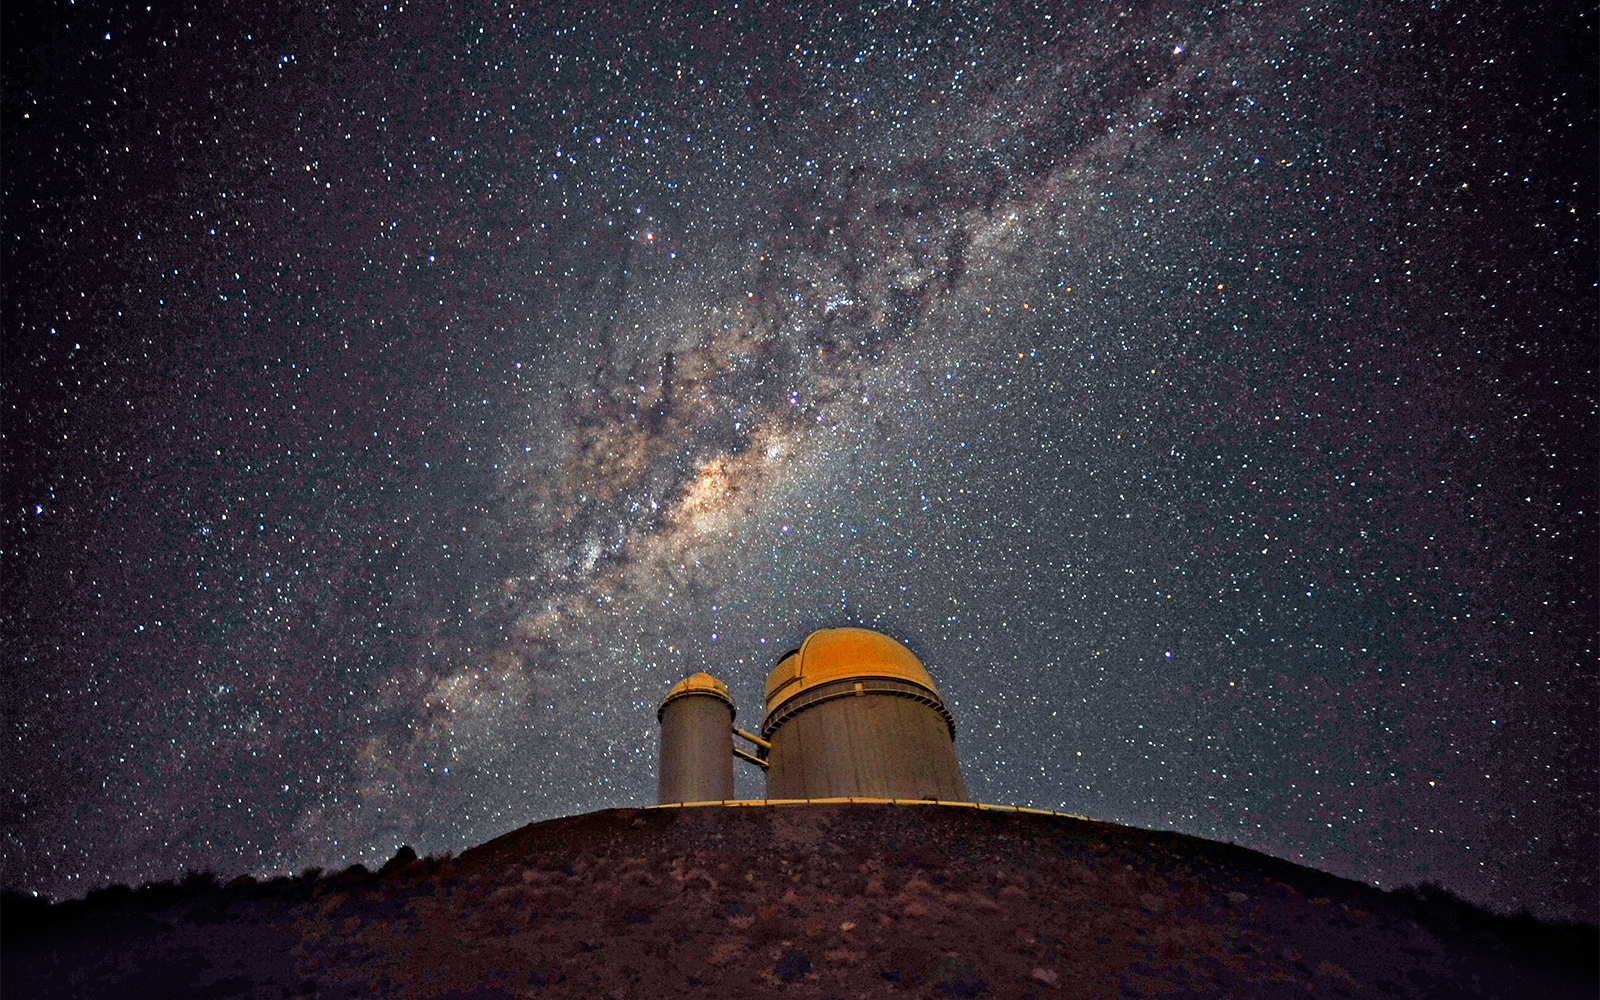 slide 2 - Photo of the Milky Way galaxy above La Silla observatory